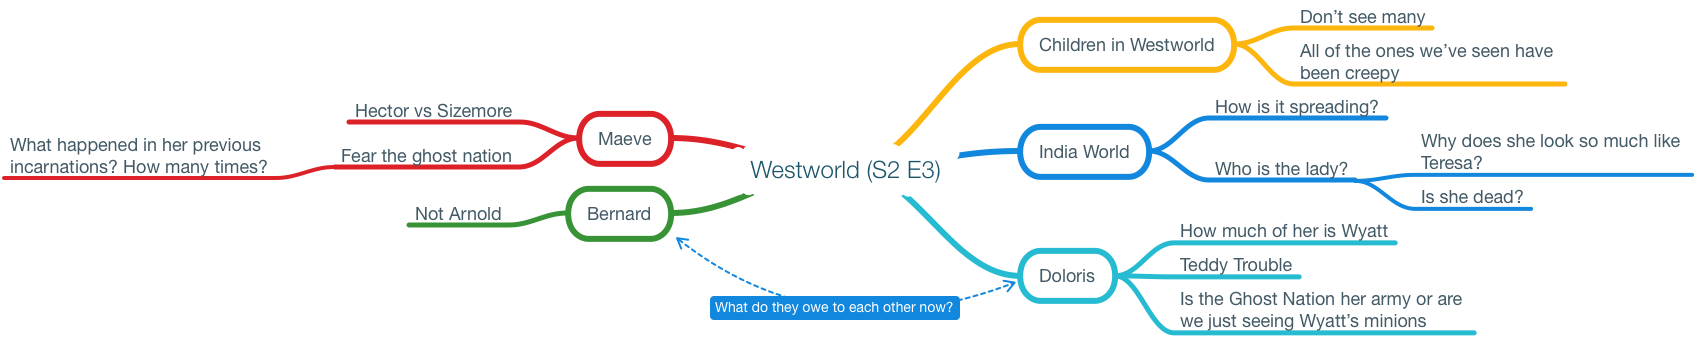 Westworld Season 2 Episode 3 connections.